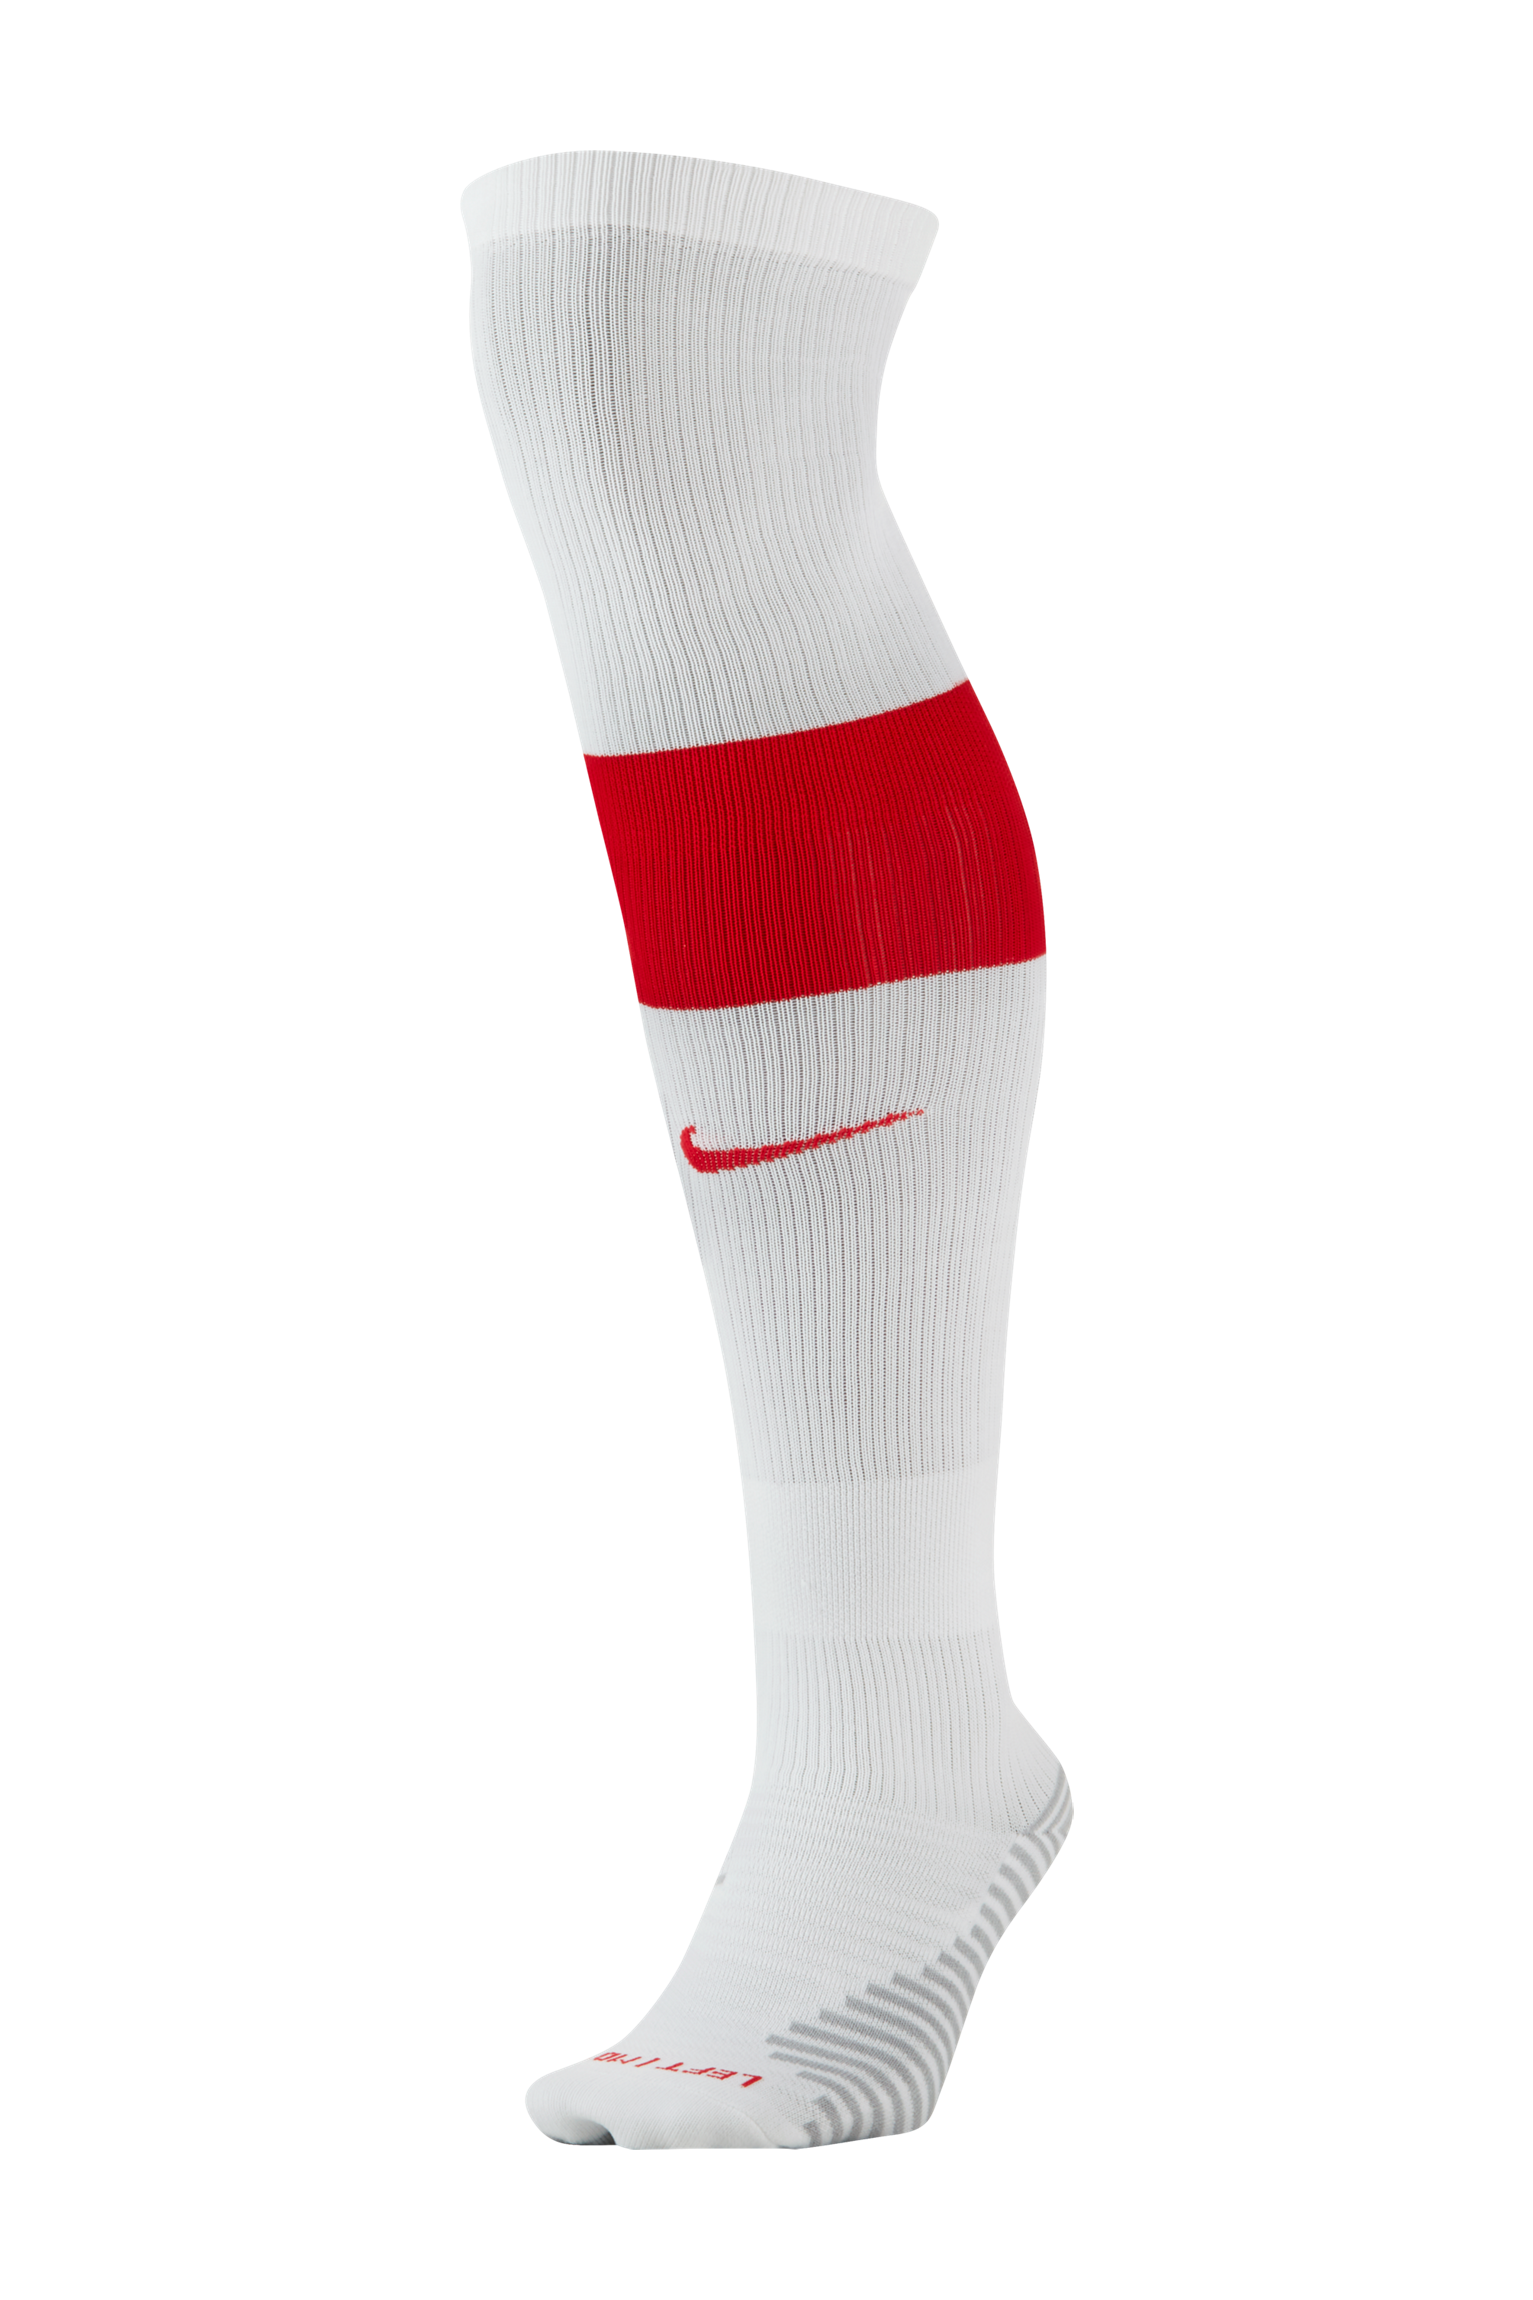 Socks Nike Poland Stadium OTC Home | R-GOL.com - boots & equipment